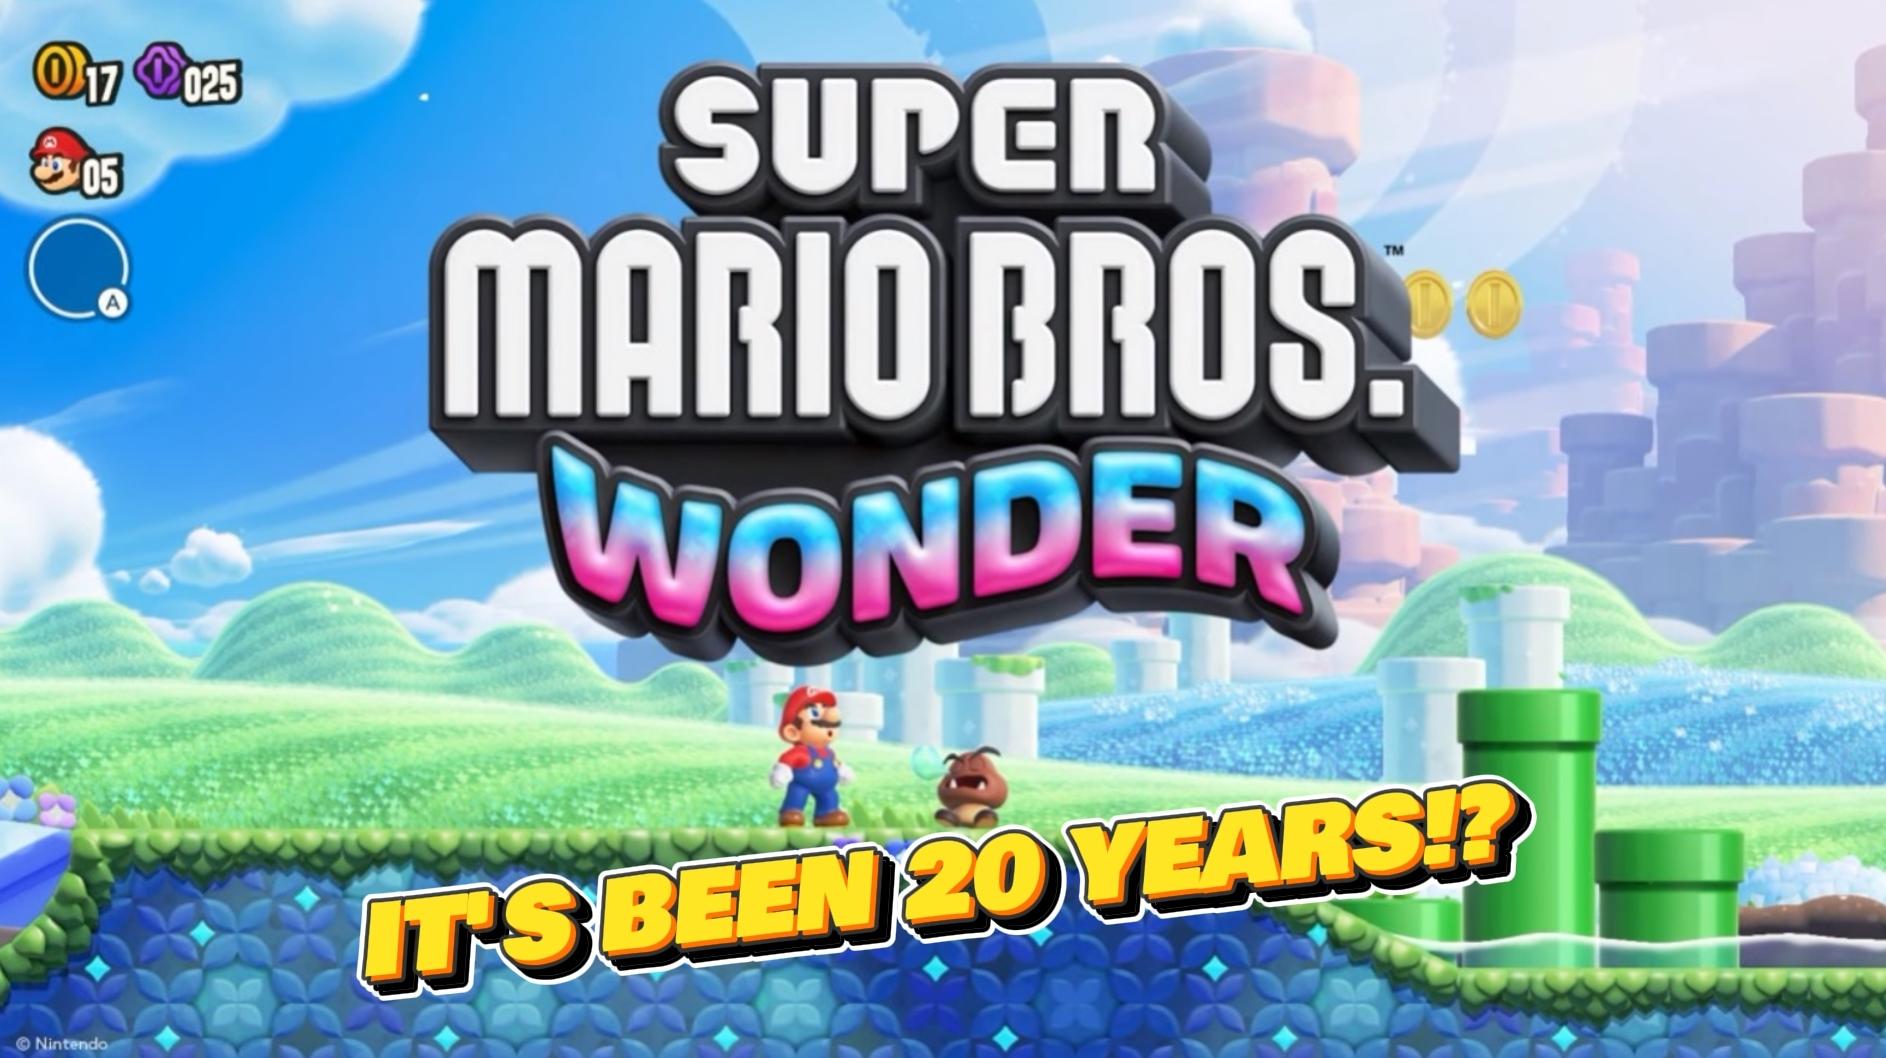 Super Mario Bros. Wonder has left me in a world of WONDERS!